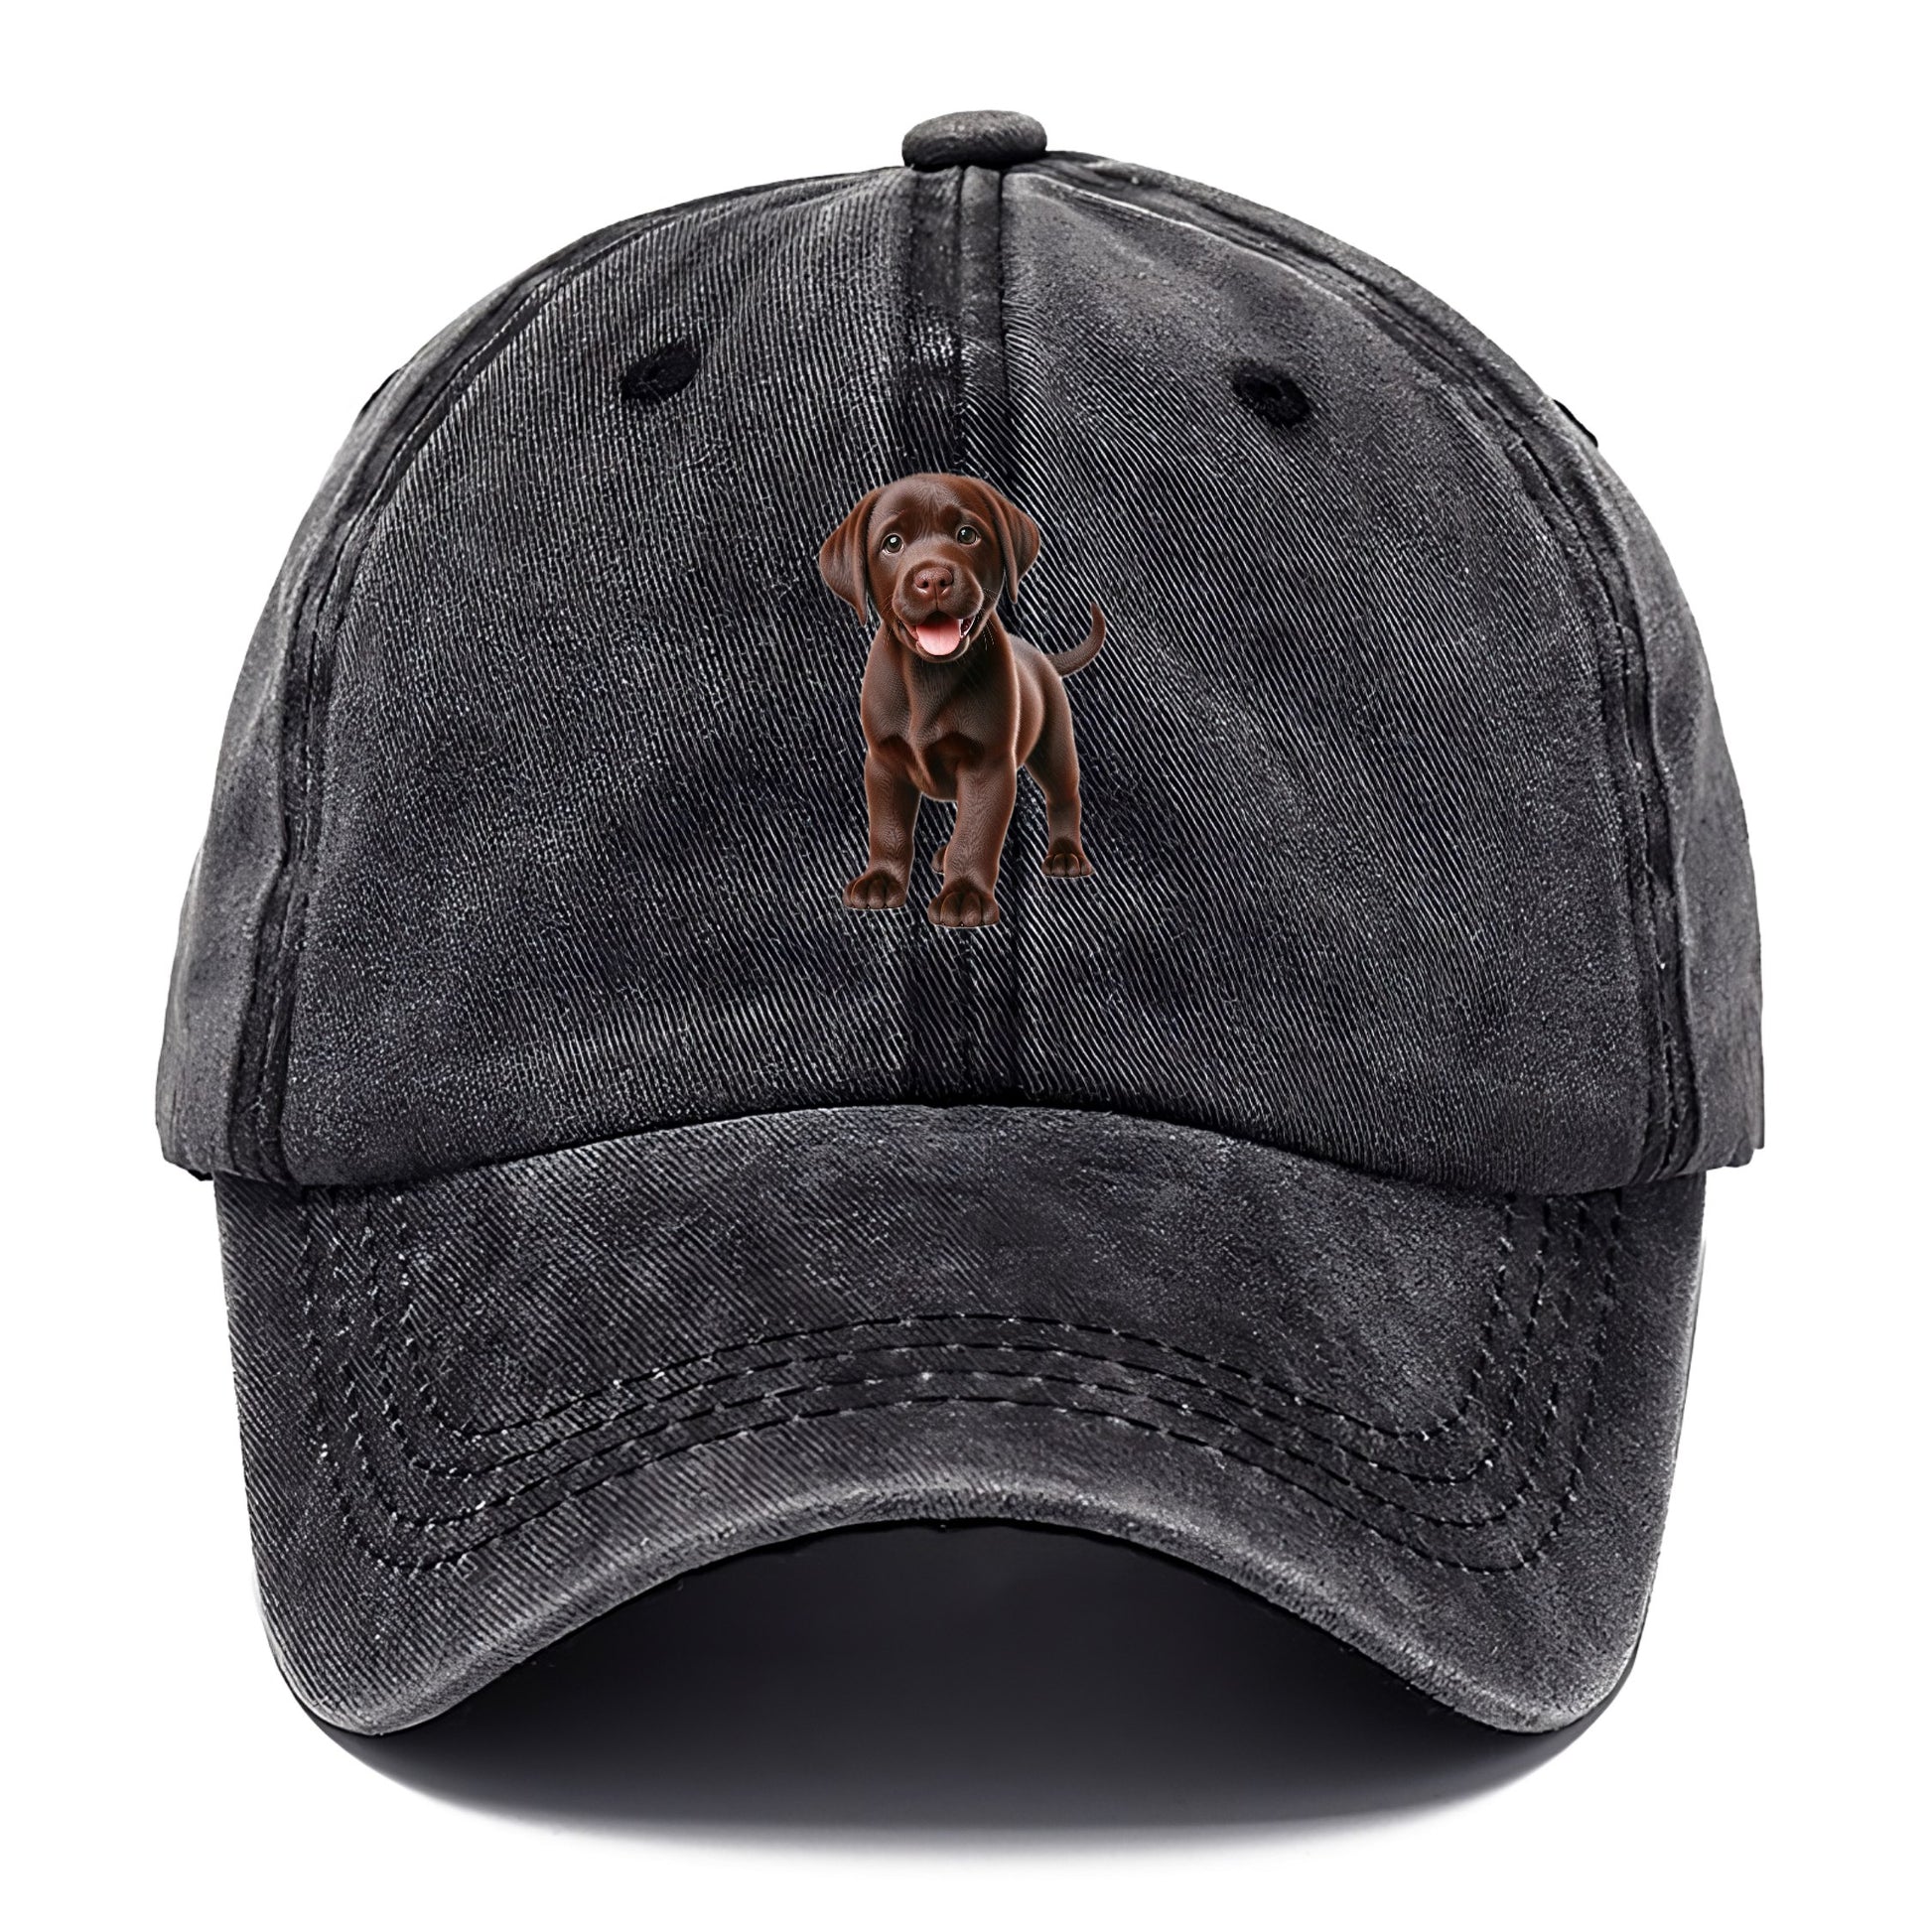 chocolate labrador Hat